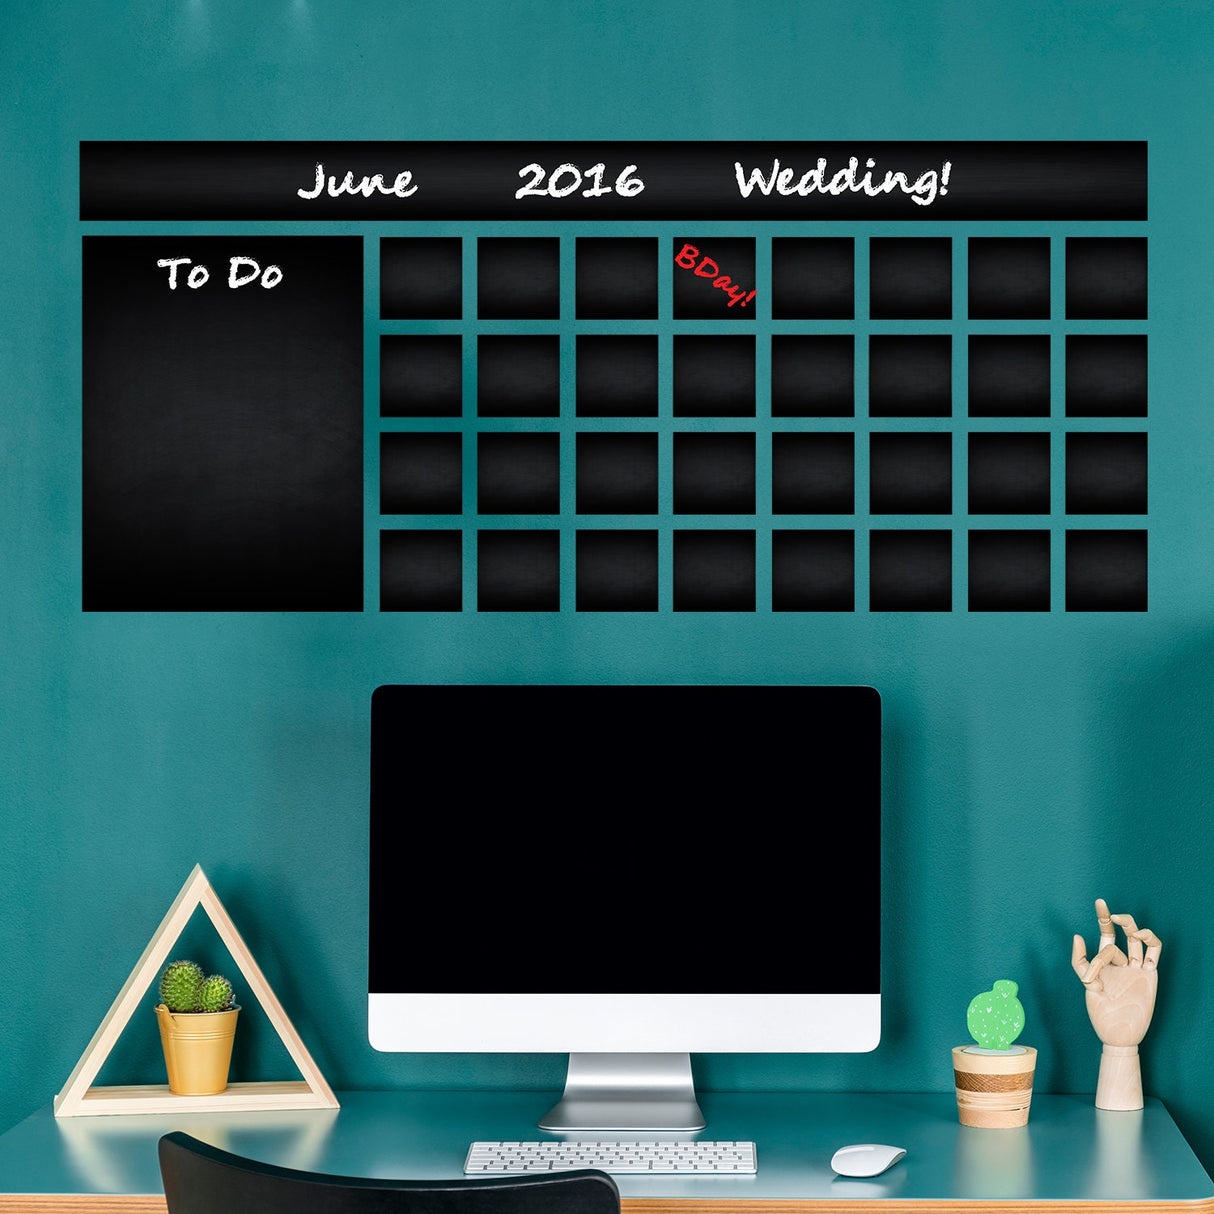 Chalkboard Wall Planner Blackboard Kitchen Sticker - Black Board Weekly Calendar Chalk Decal Monthly Week Day Meal Memo Menu Daily Organiser